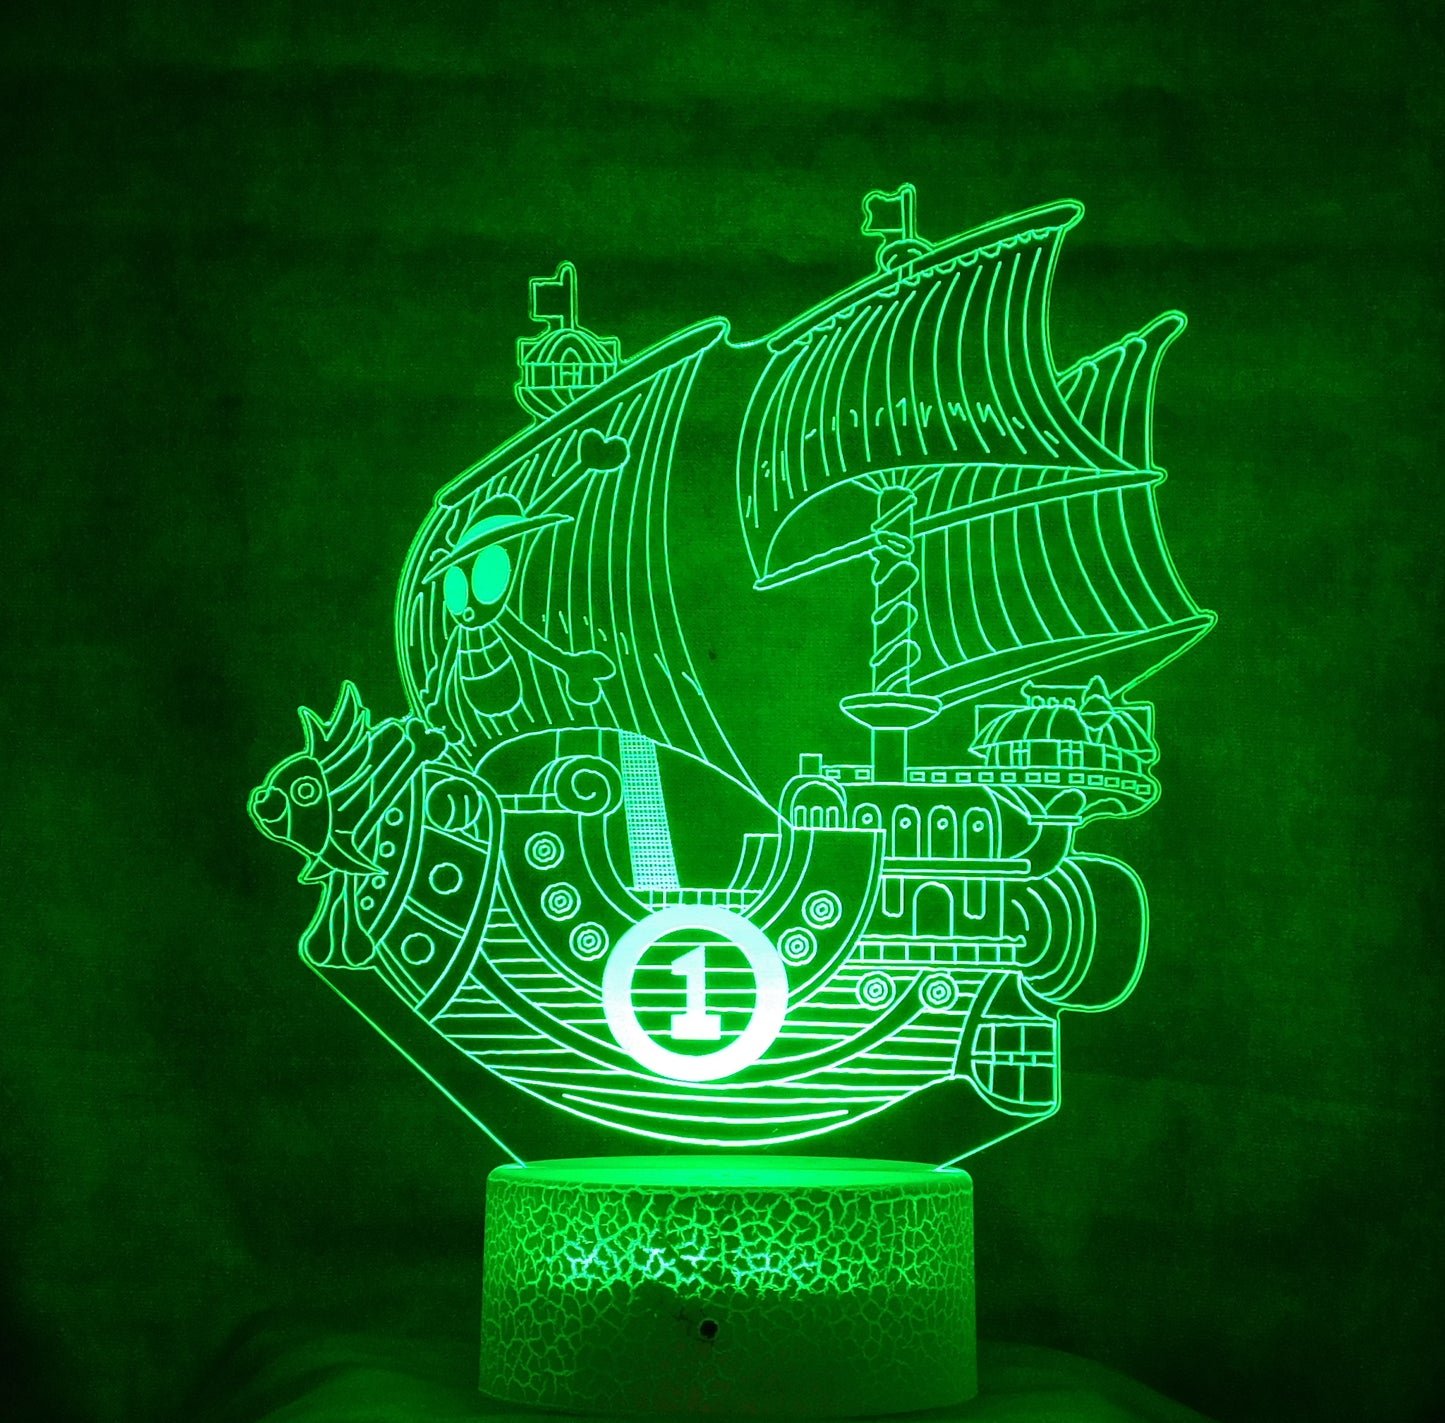 Pirate Ship 3-D Optical Illusion Multicolor LED Lamp